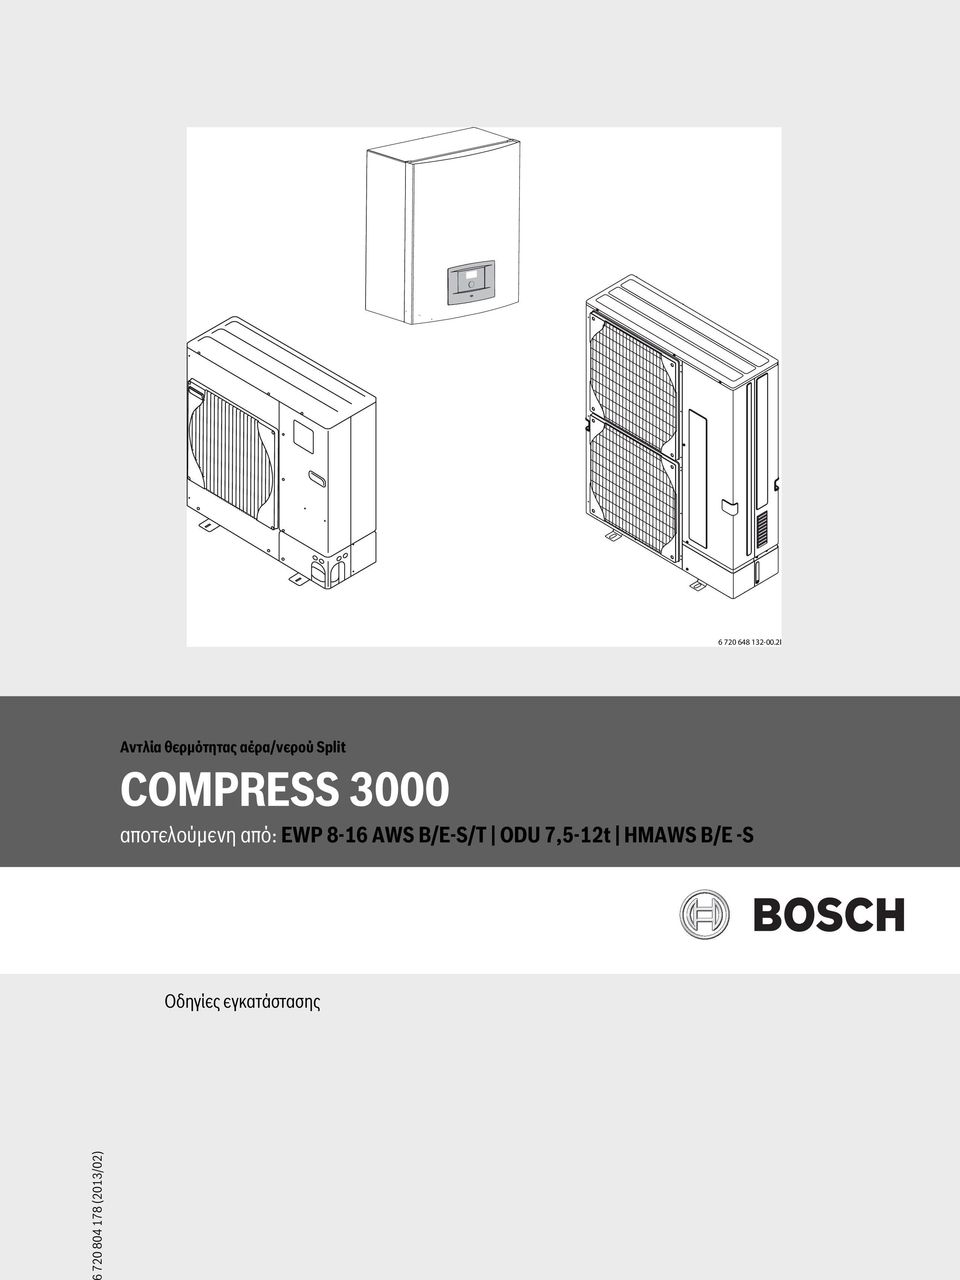 COMPRESS 3000 αποτελούμενη από: EWP